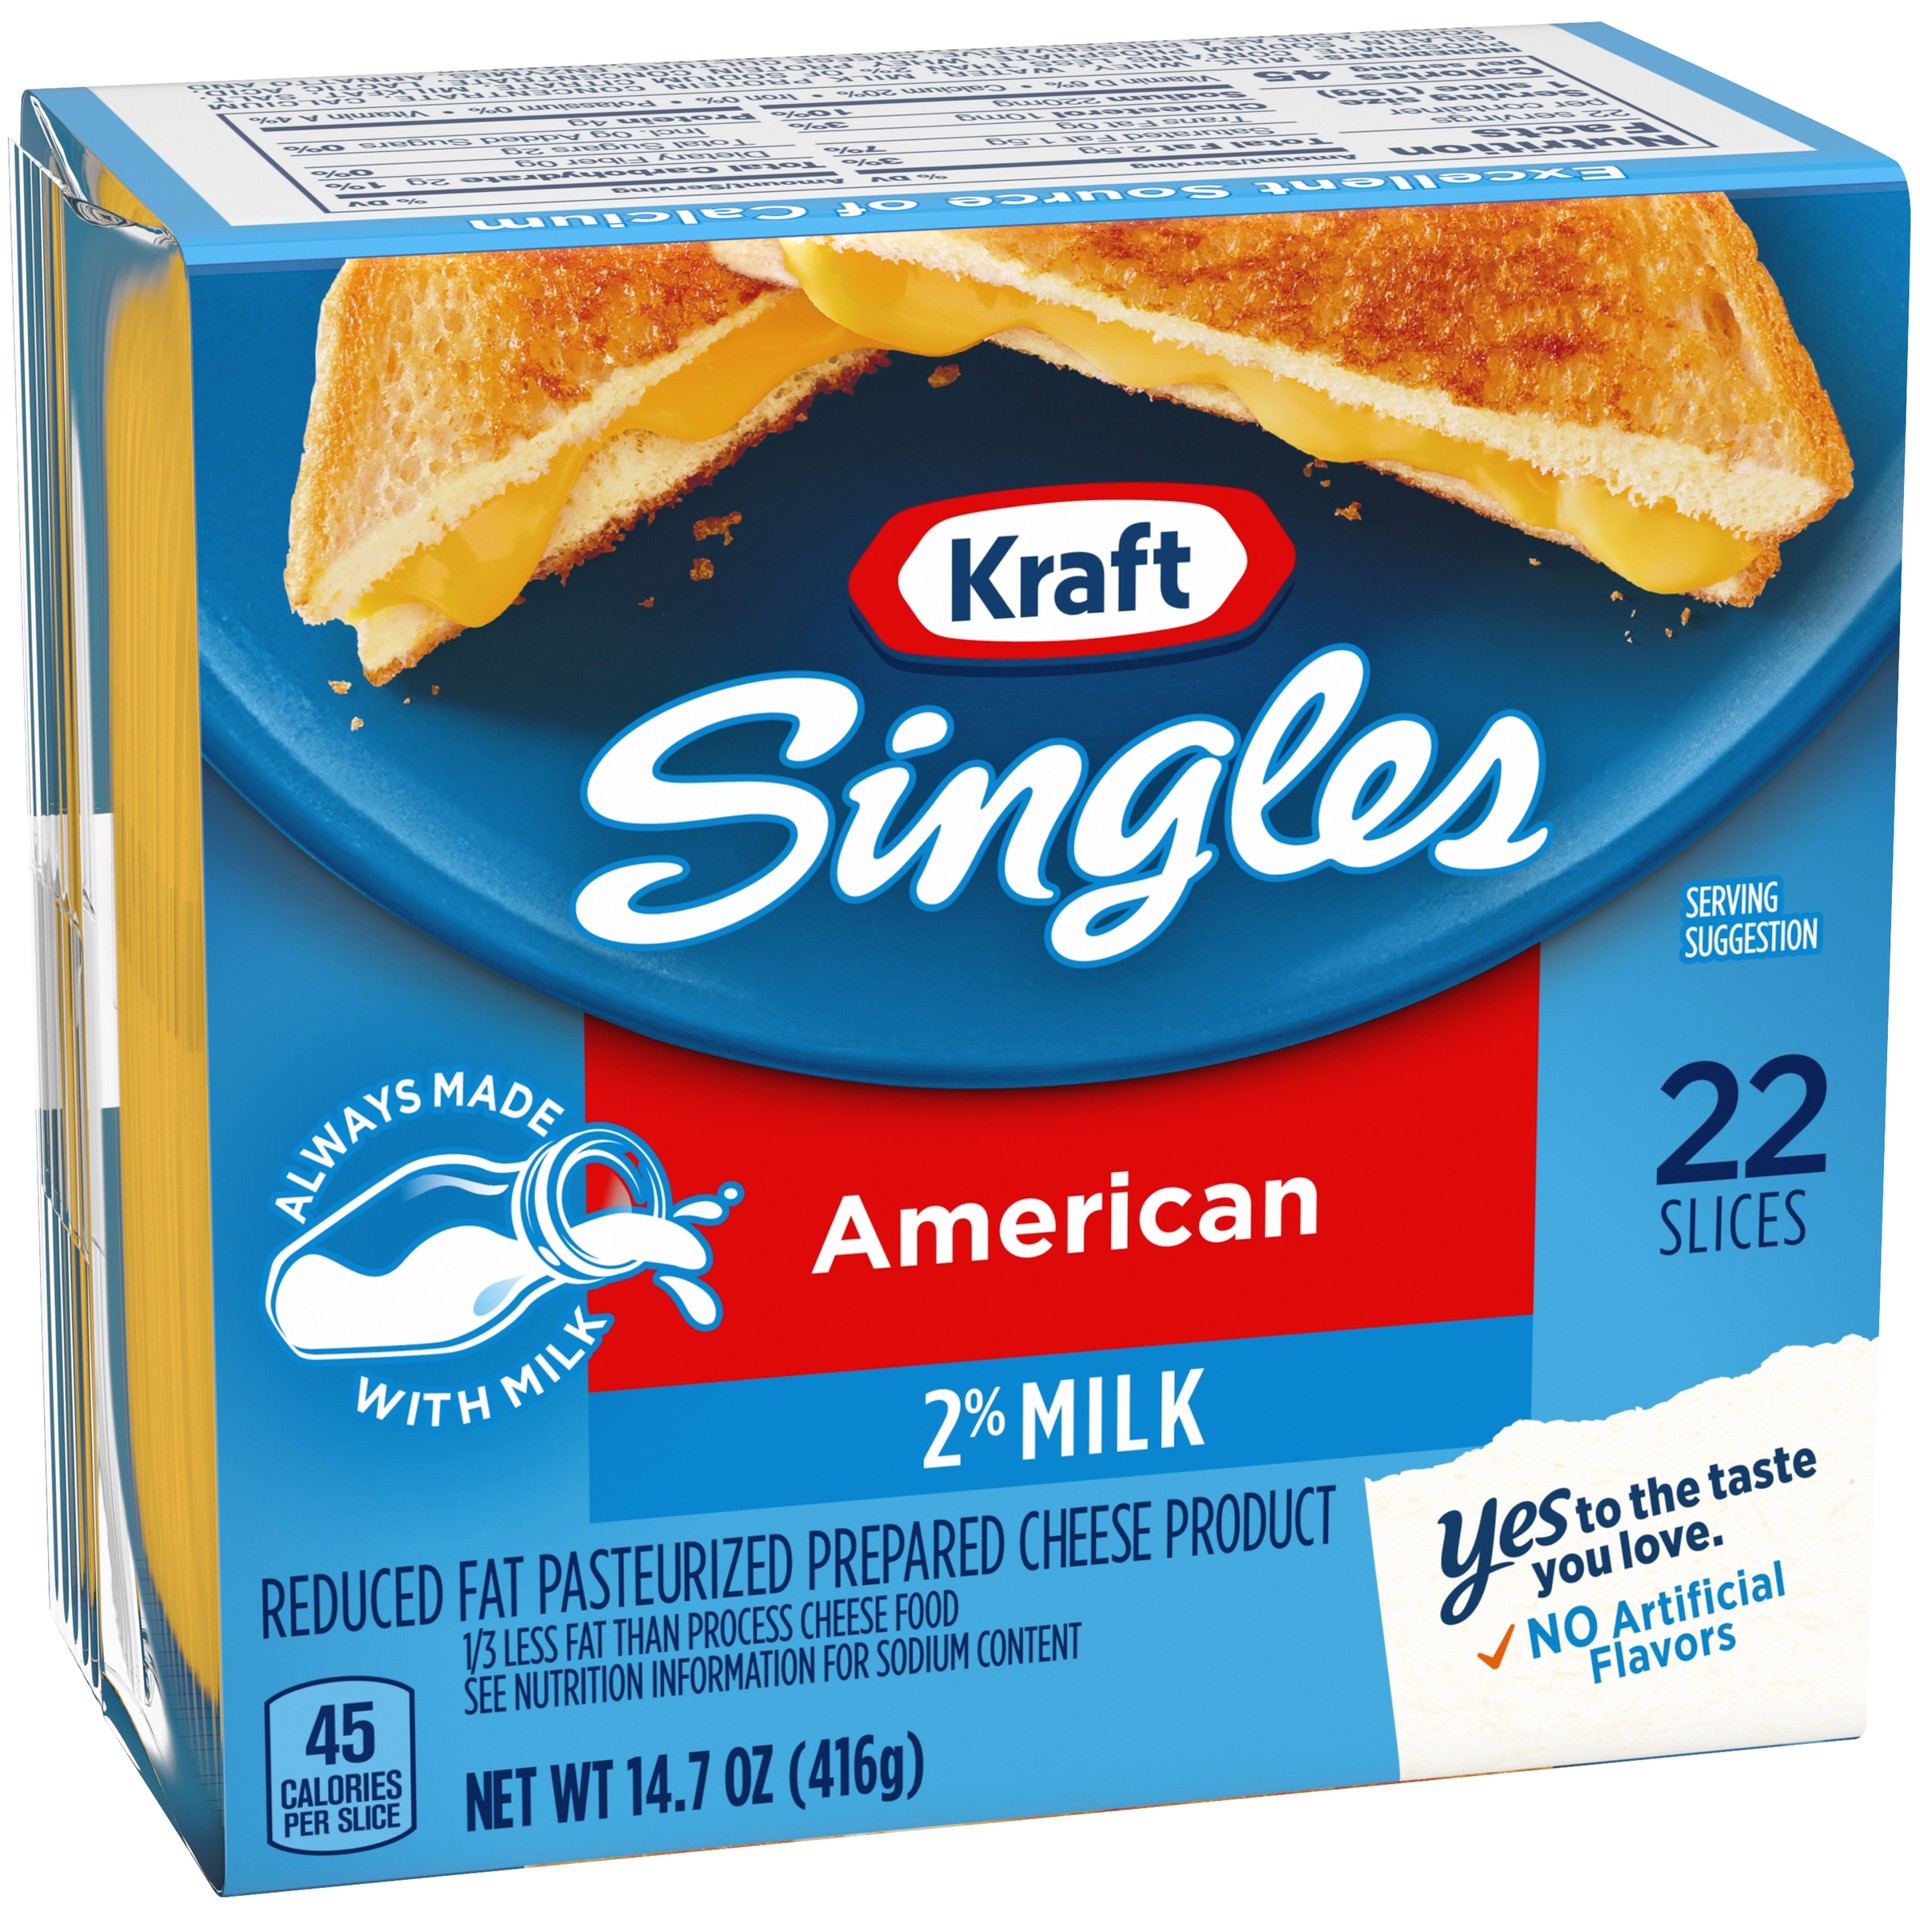 slide 3 of 6, Kraft Singles 2% Pasteurized Prepared Cheese Product American Slices Pack, 22 ct; 14.7 oz